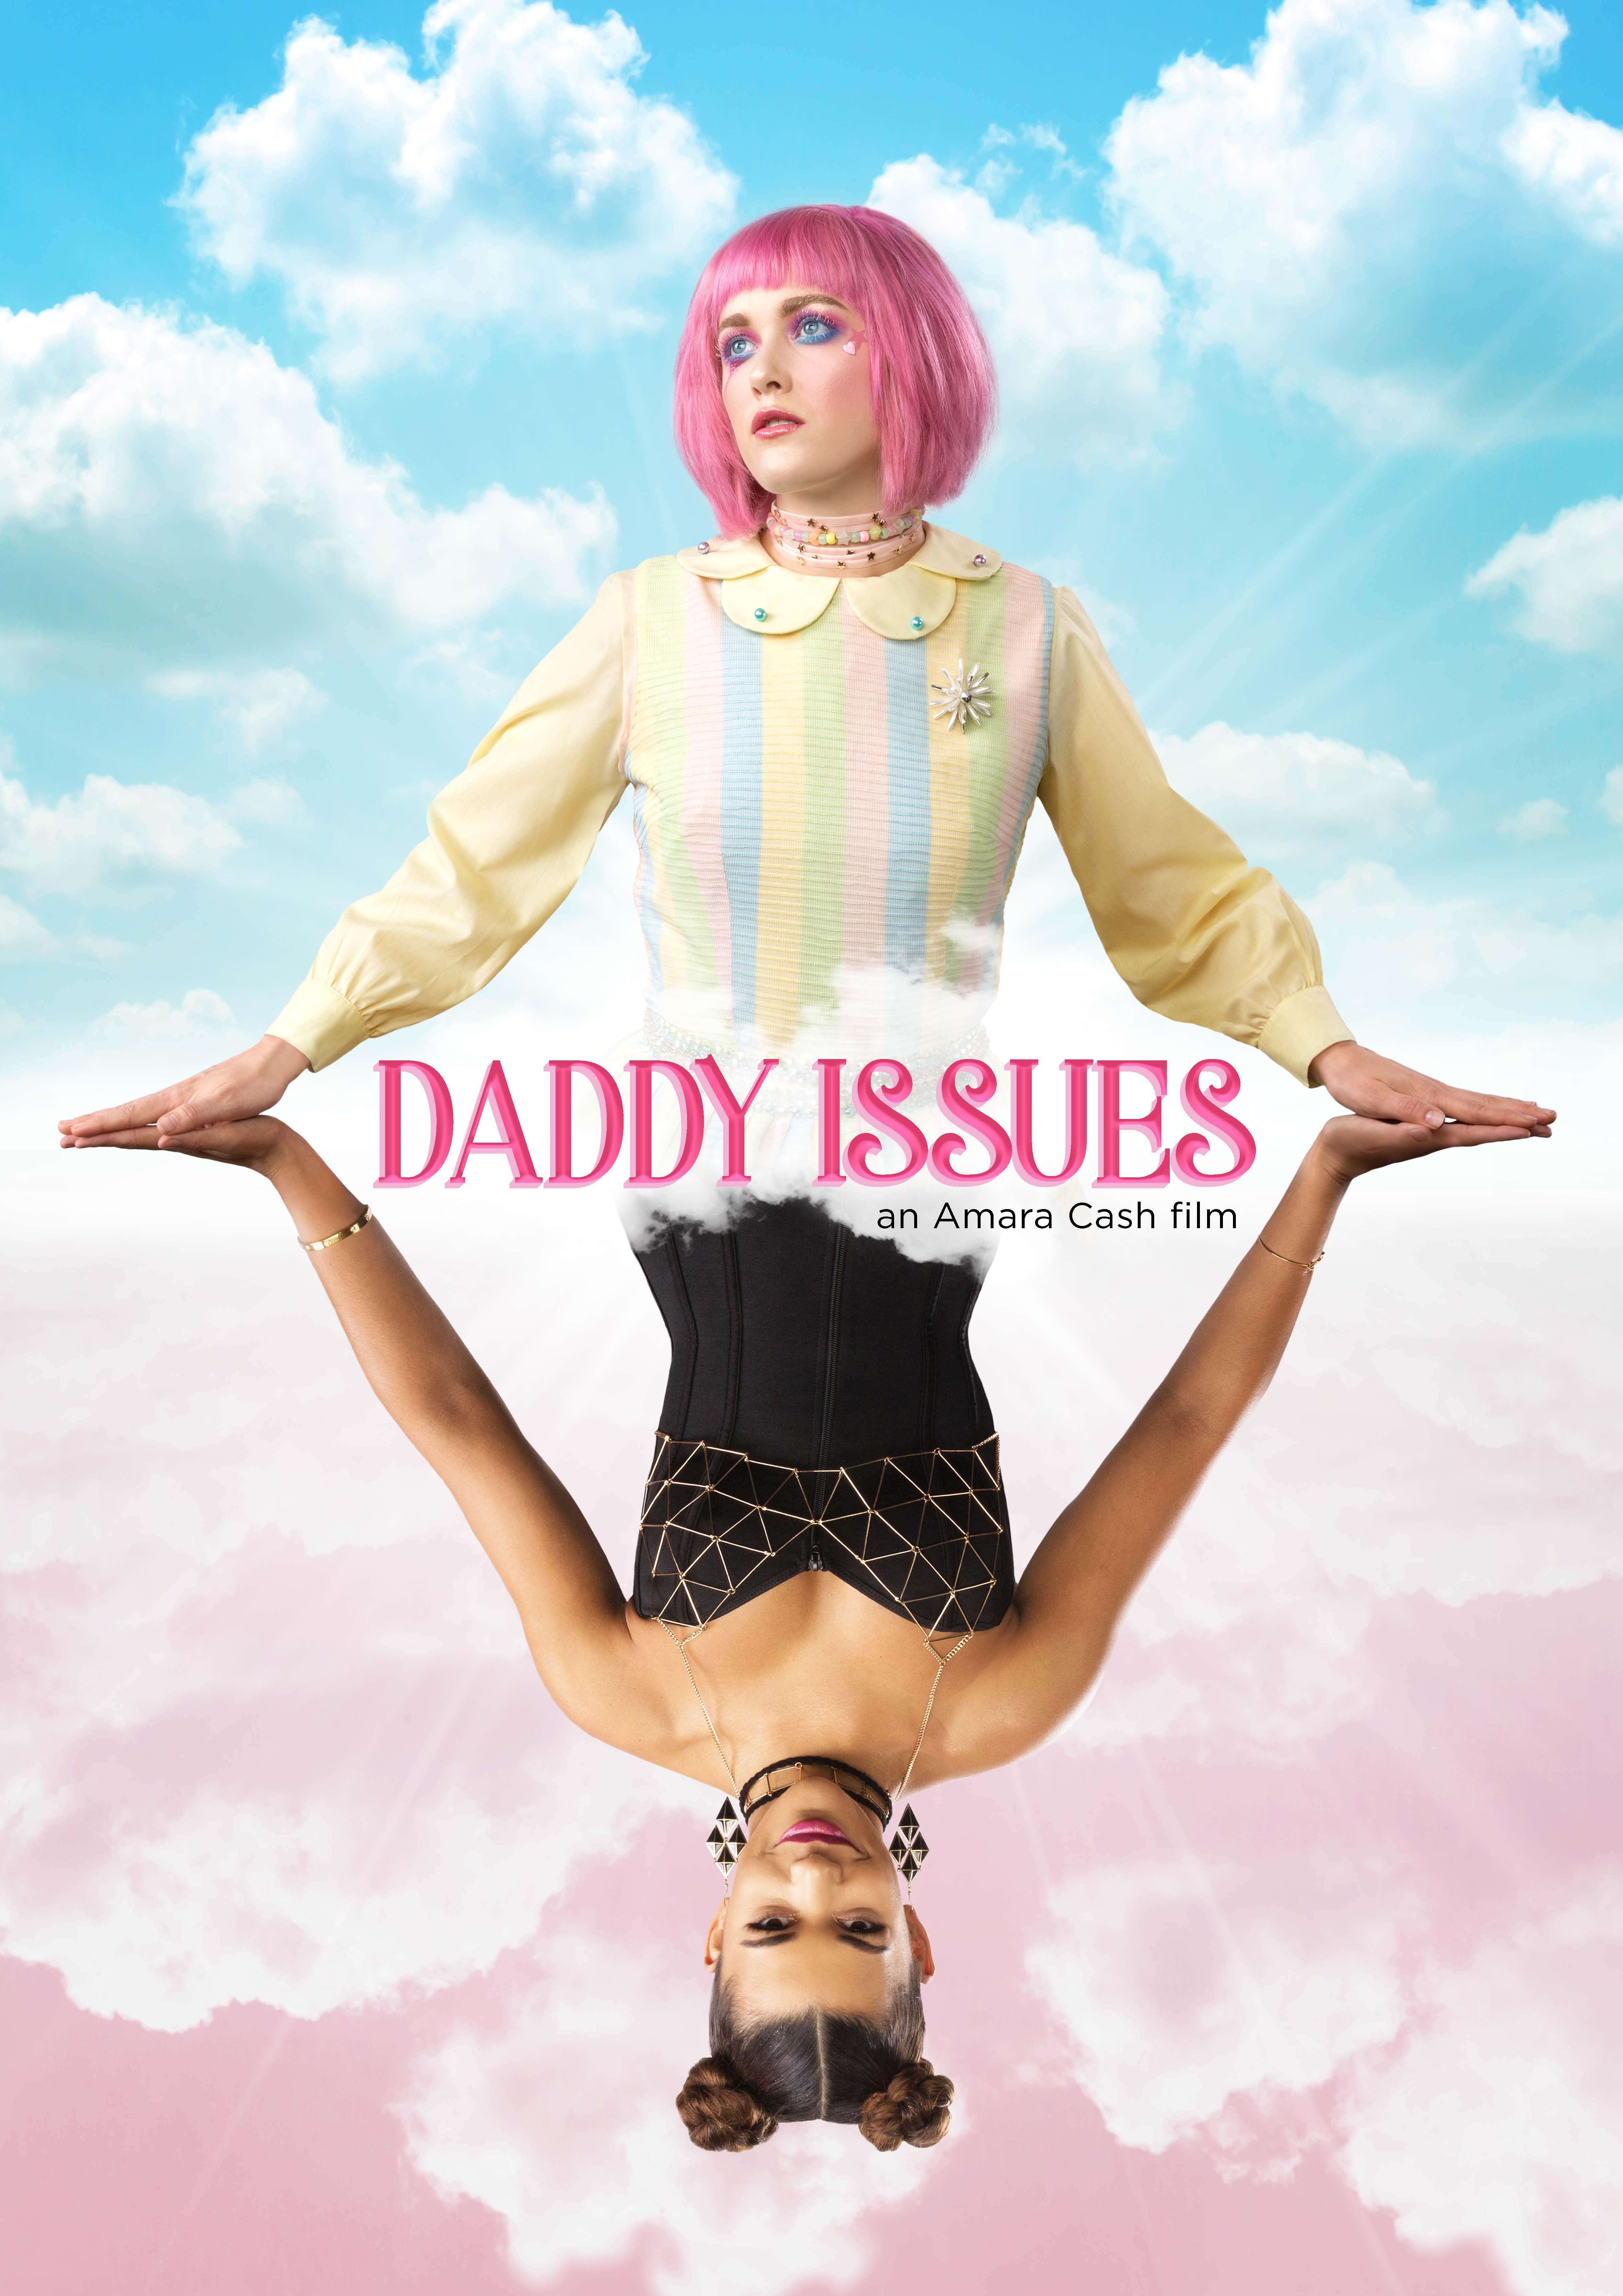 Nonton film Daddy Issues layarkaca21 indoxx1 ganool online streaming terbaru